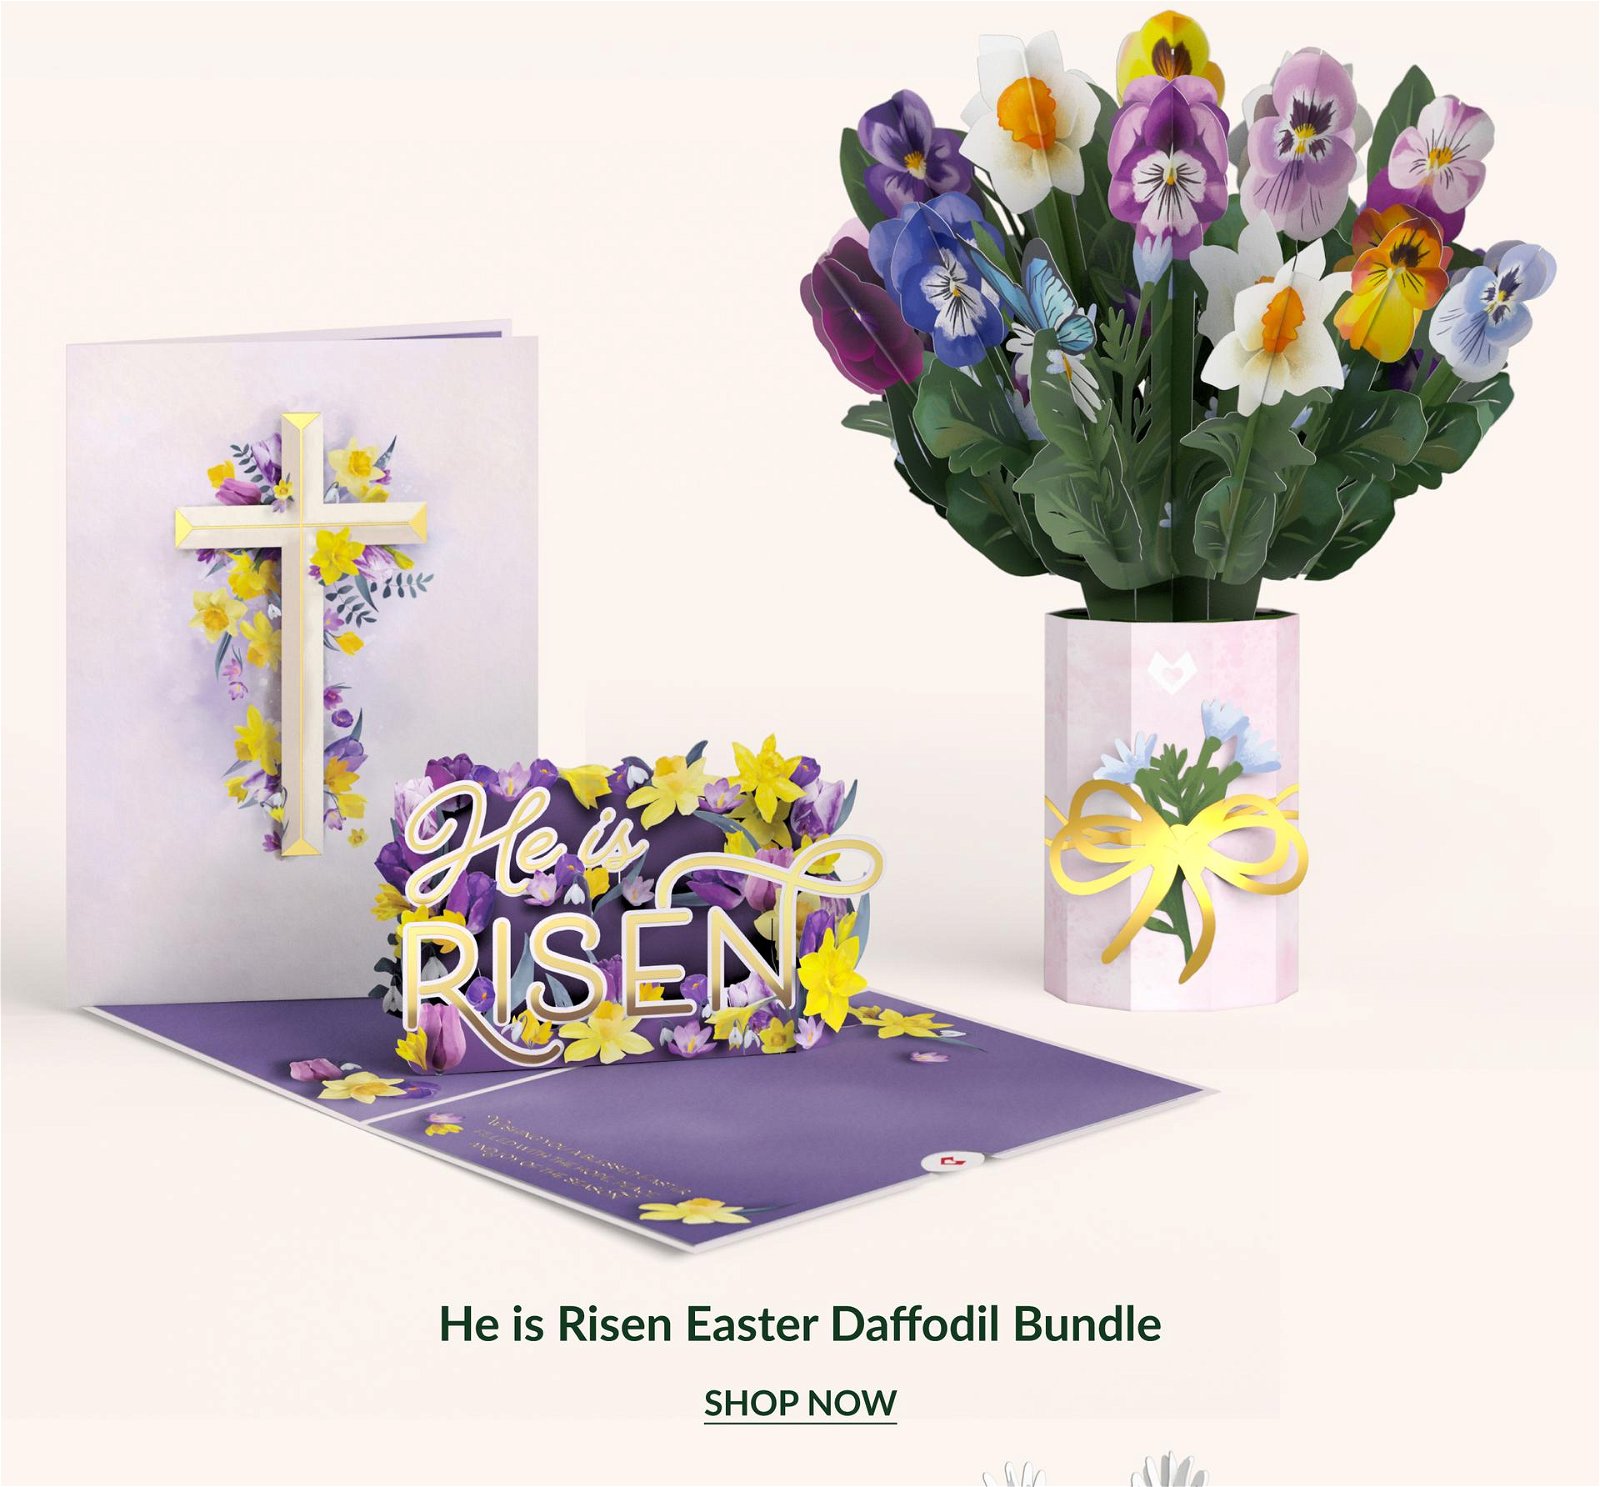 He is Risen Easter Daffodil Bundle